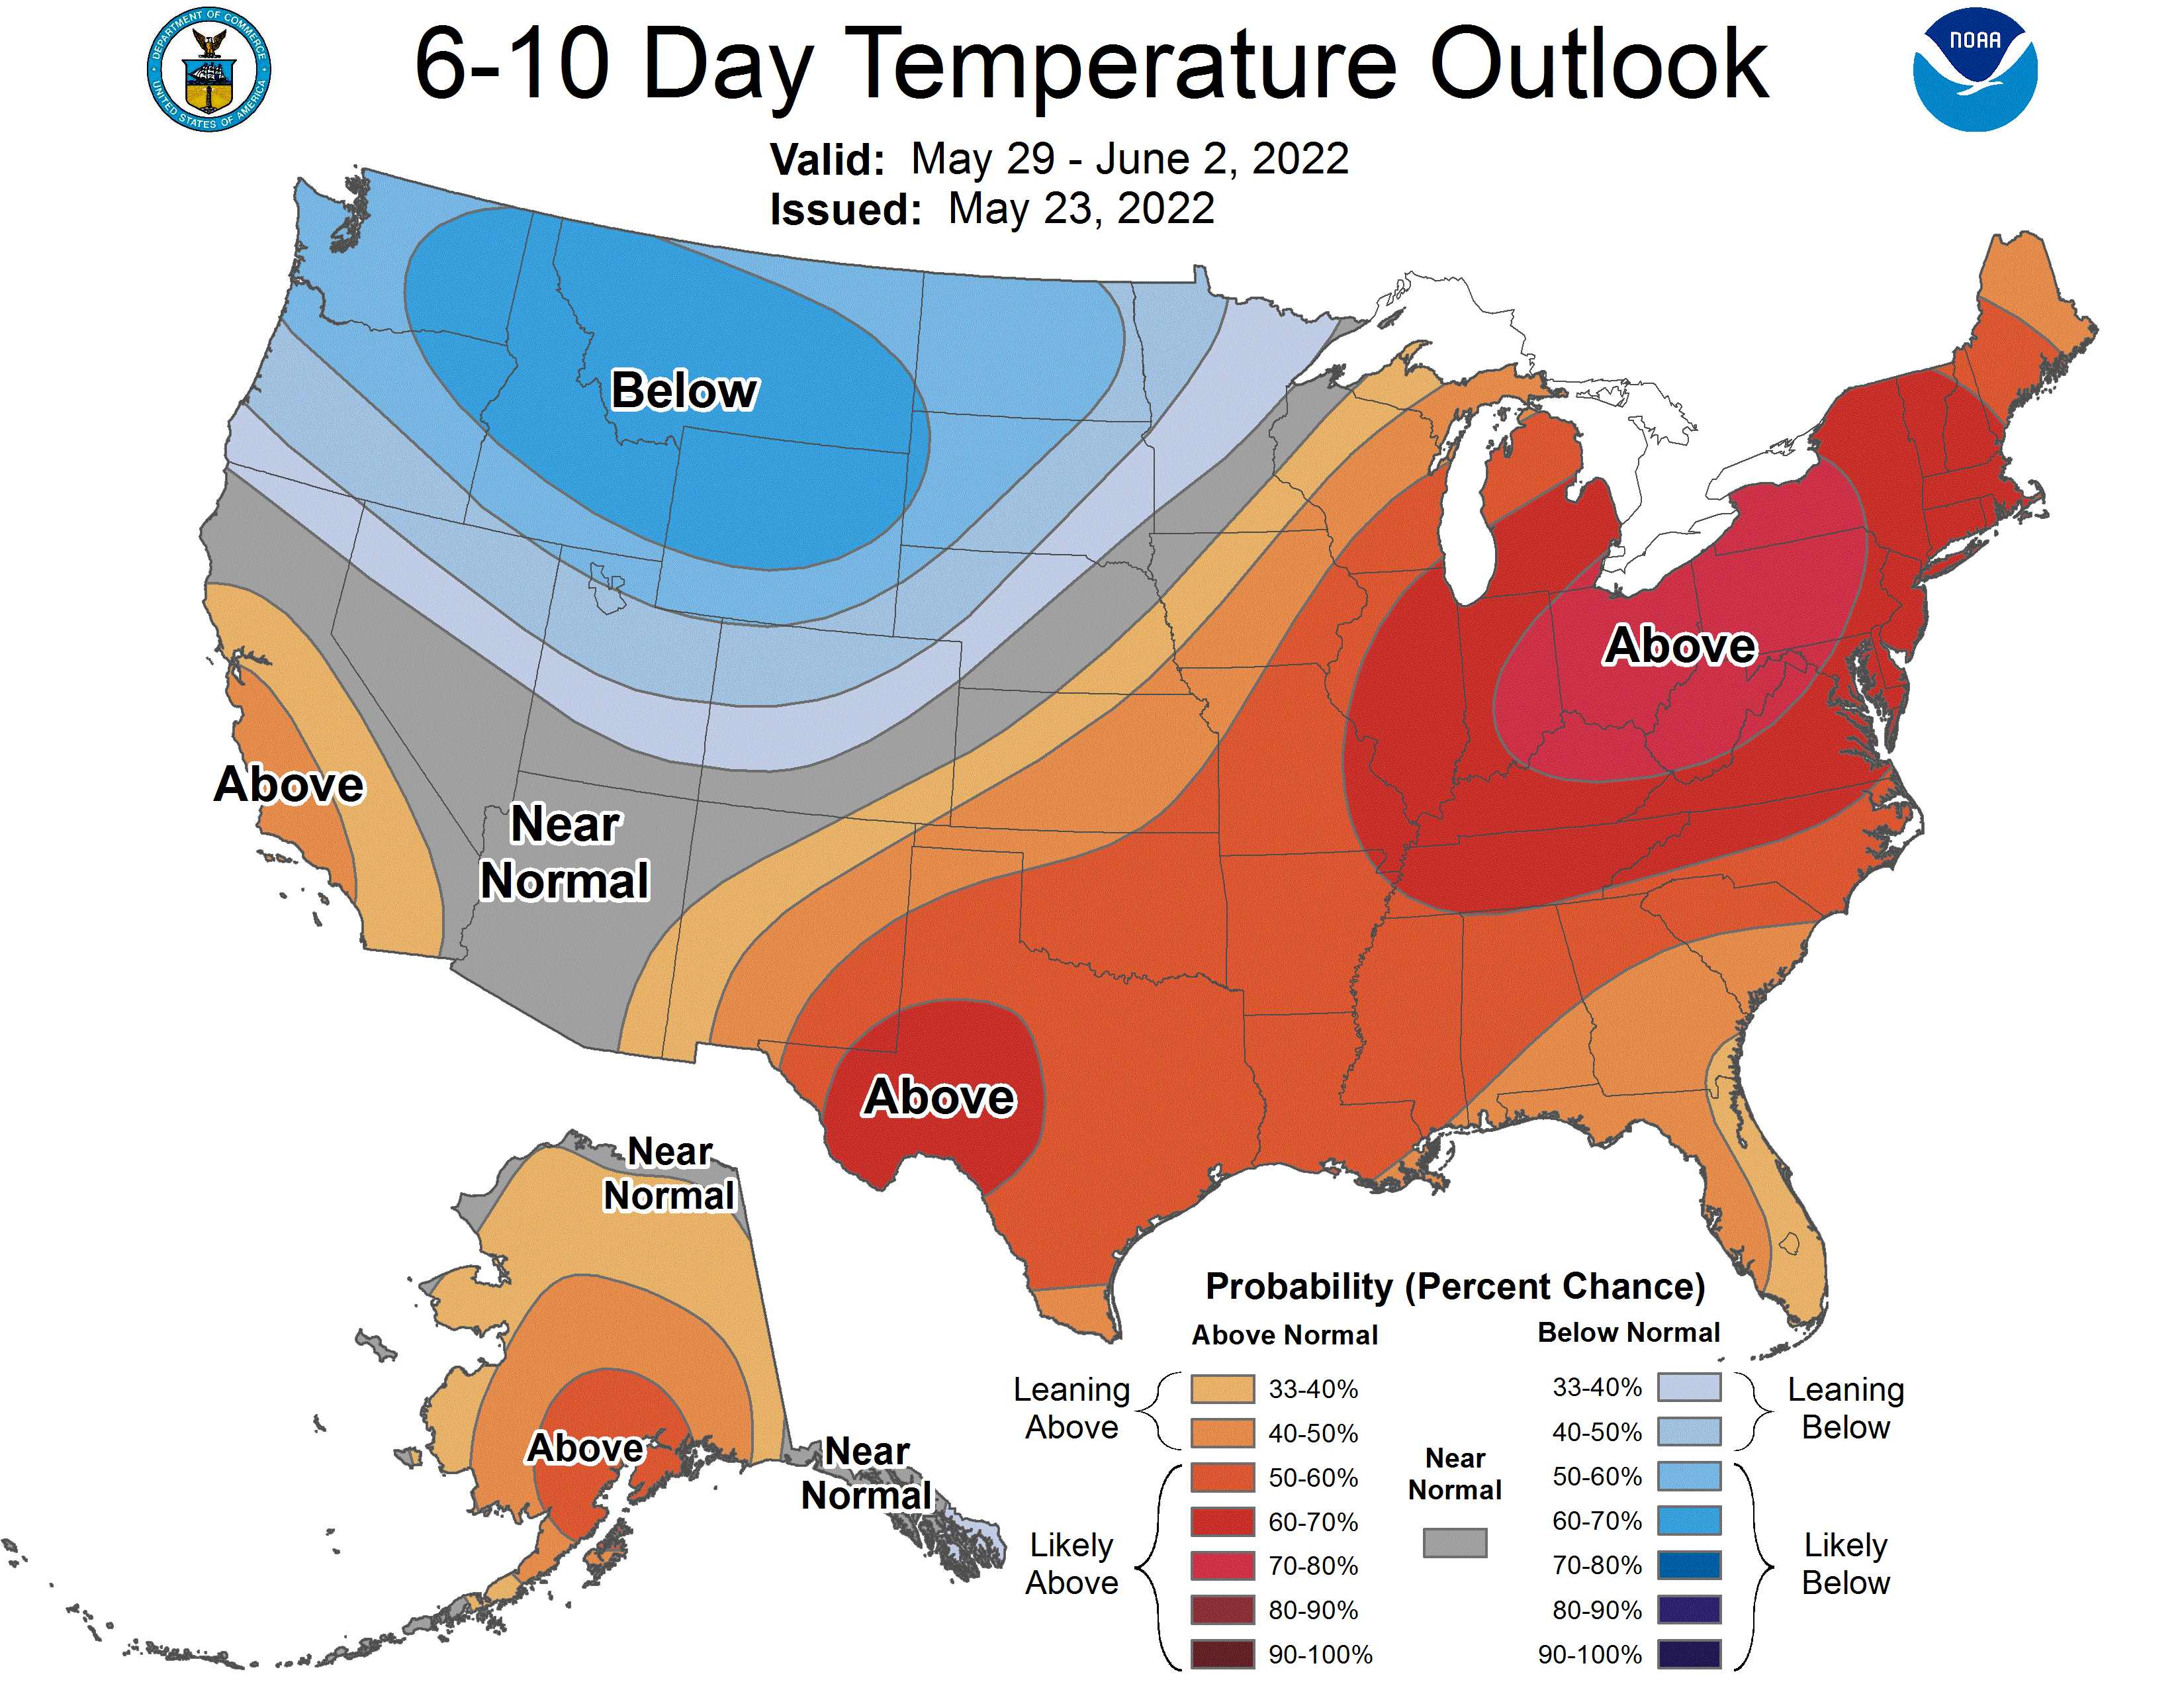 NOAA 6-10 day forecasts